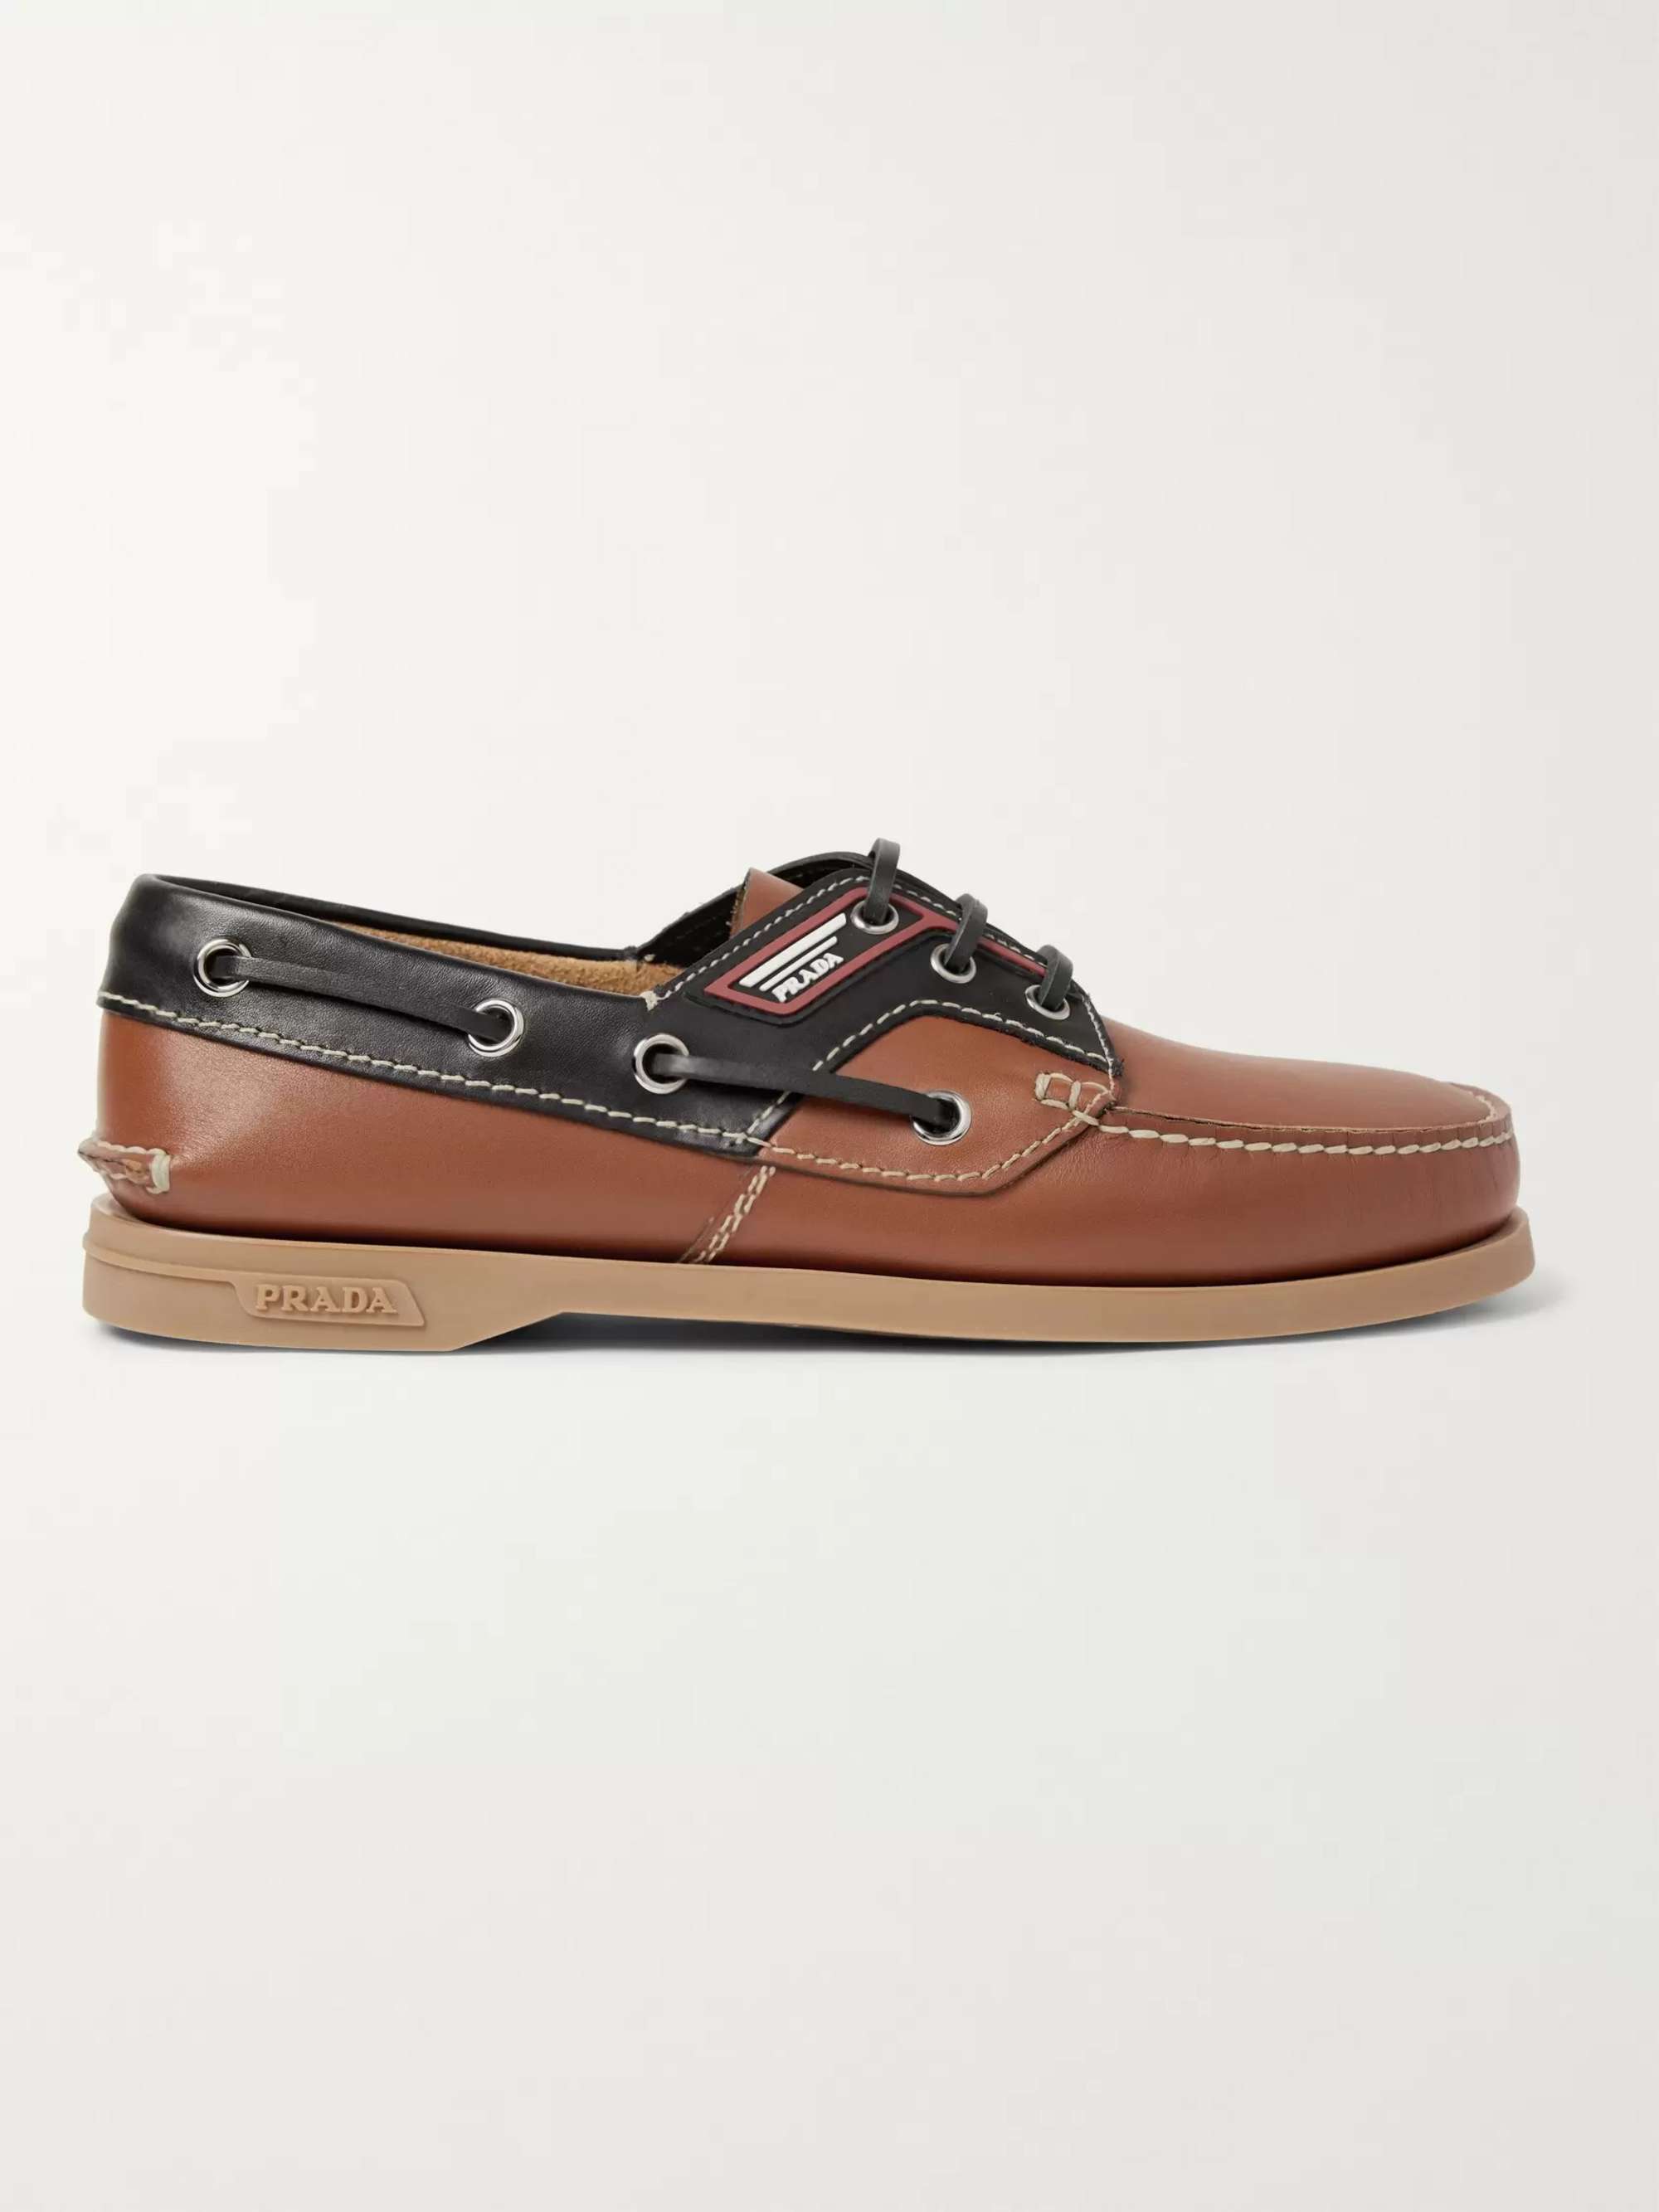 PRADA Leather Boat Shoes | MR PORTER